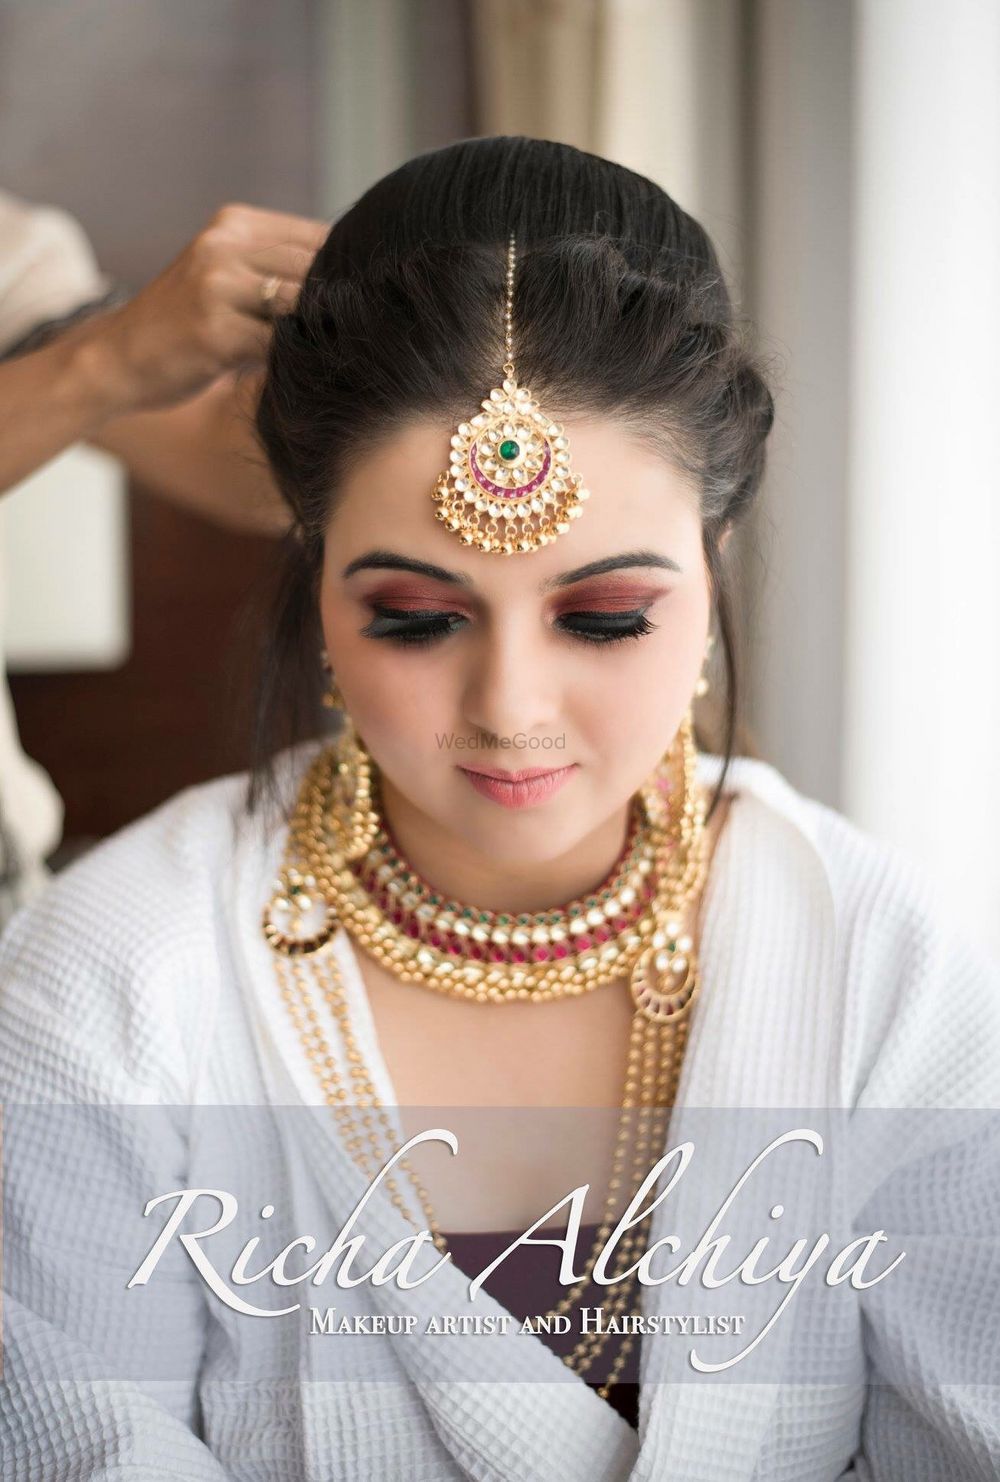 Photo From destination brides - By Richa Alchiya Makeup Artist and Hairstylist